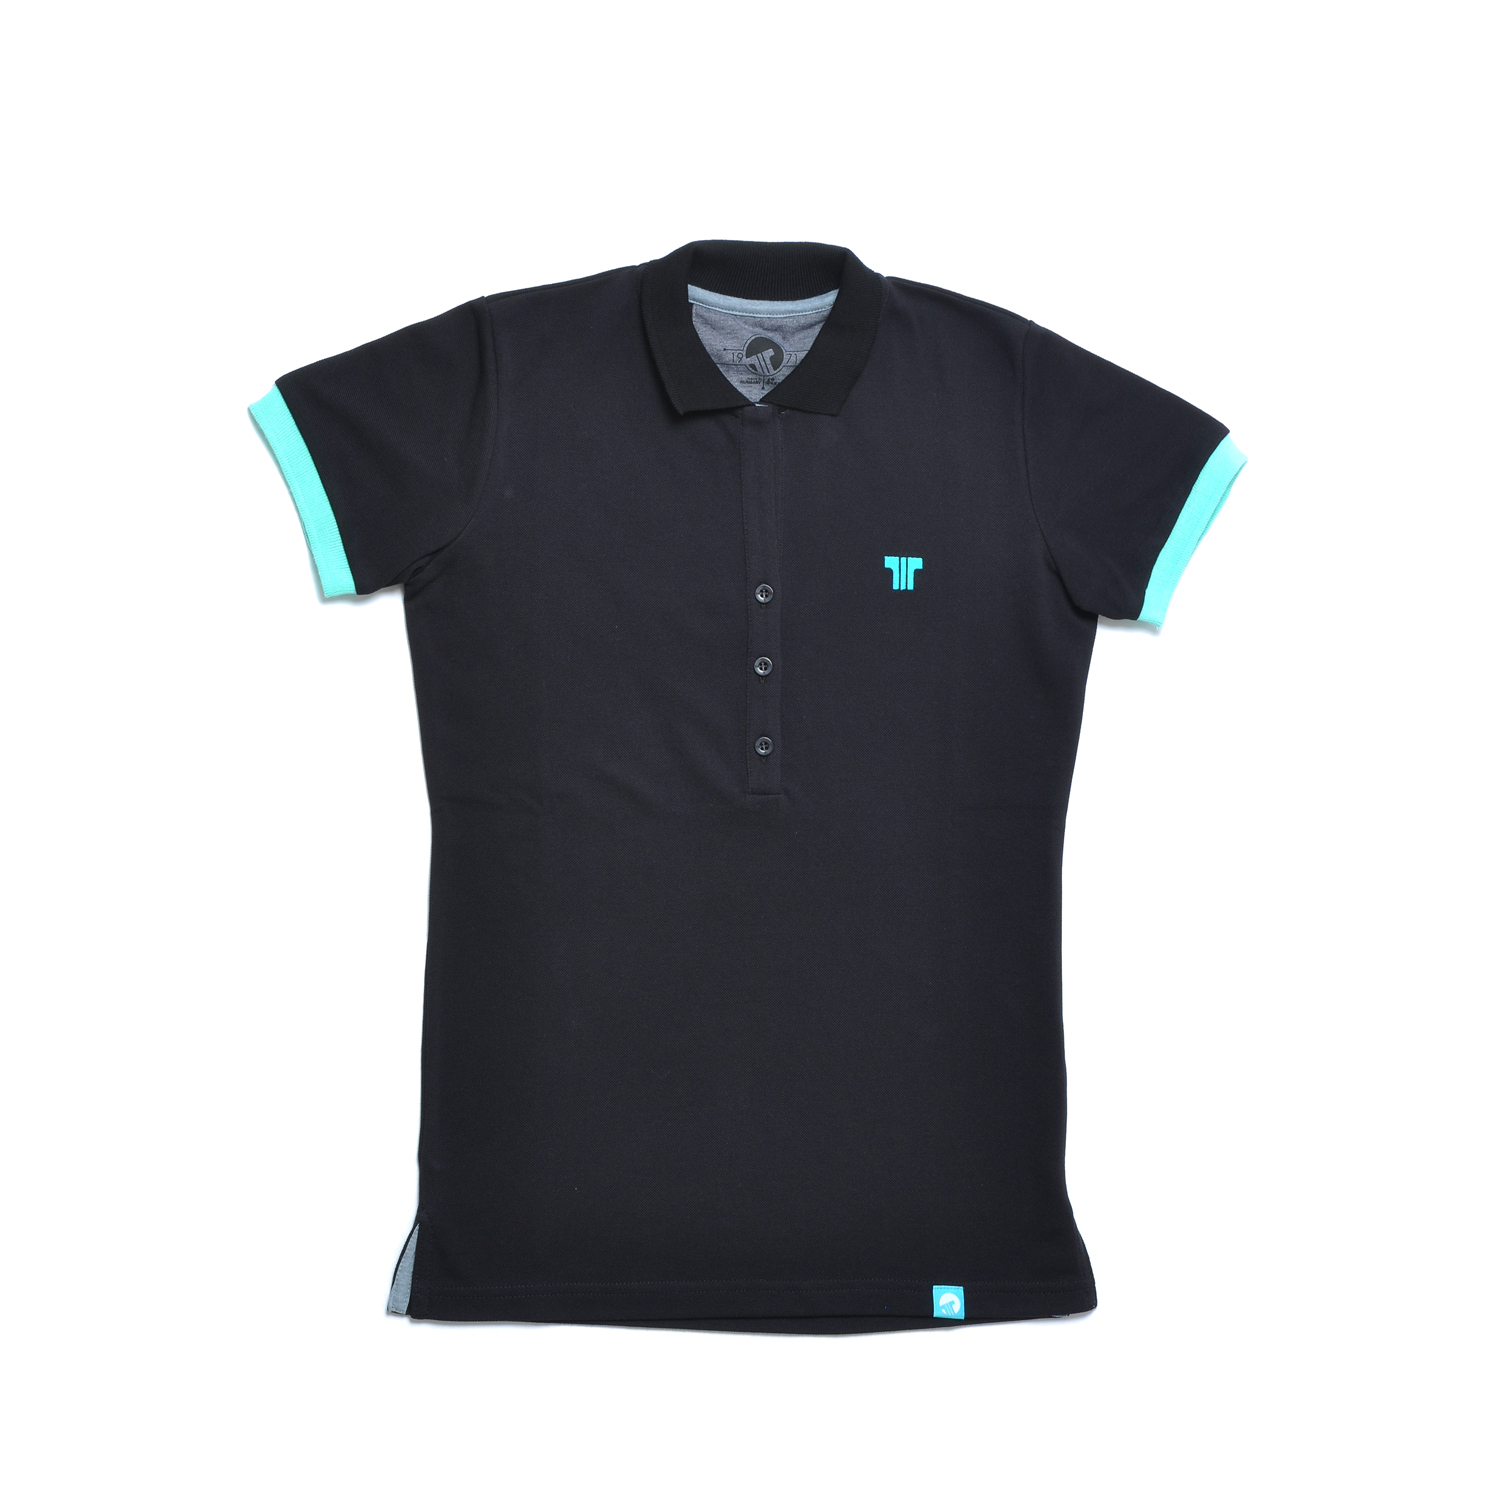 Tisza shoes - Tennis shirt - Black-mint